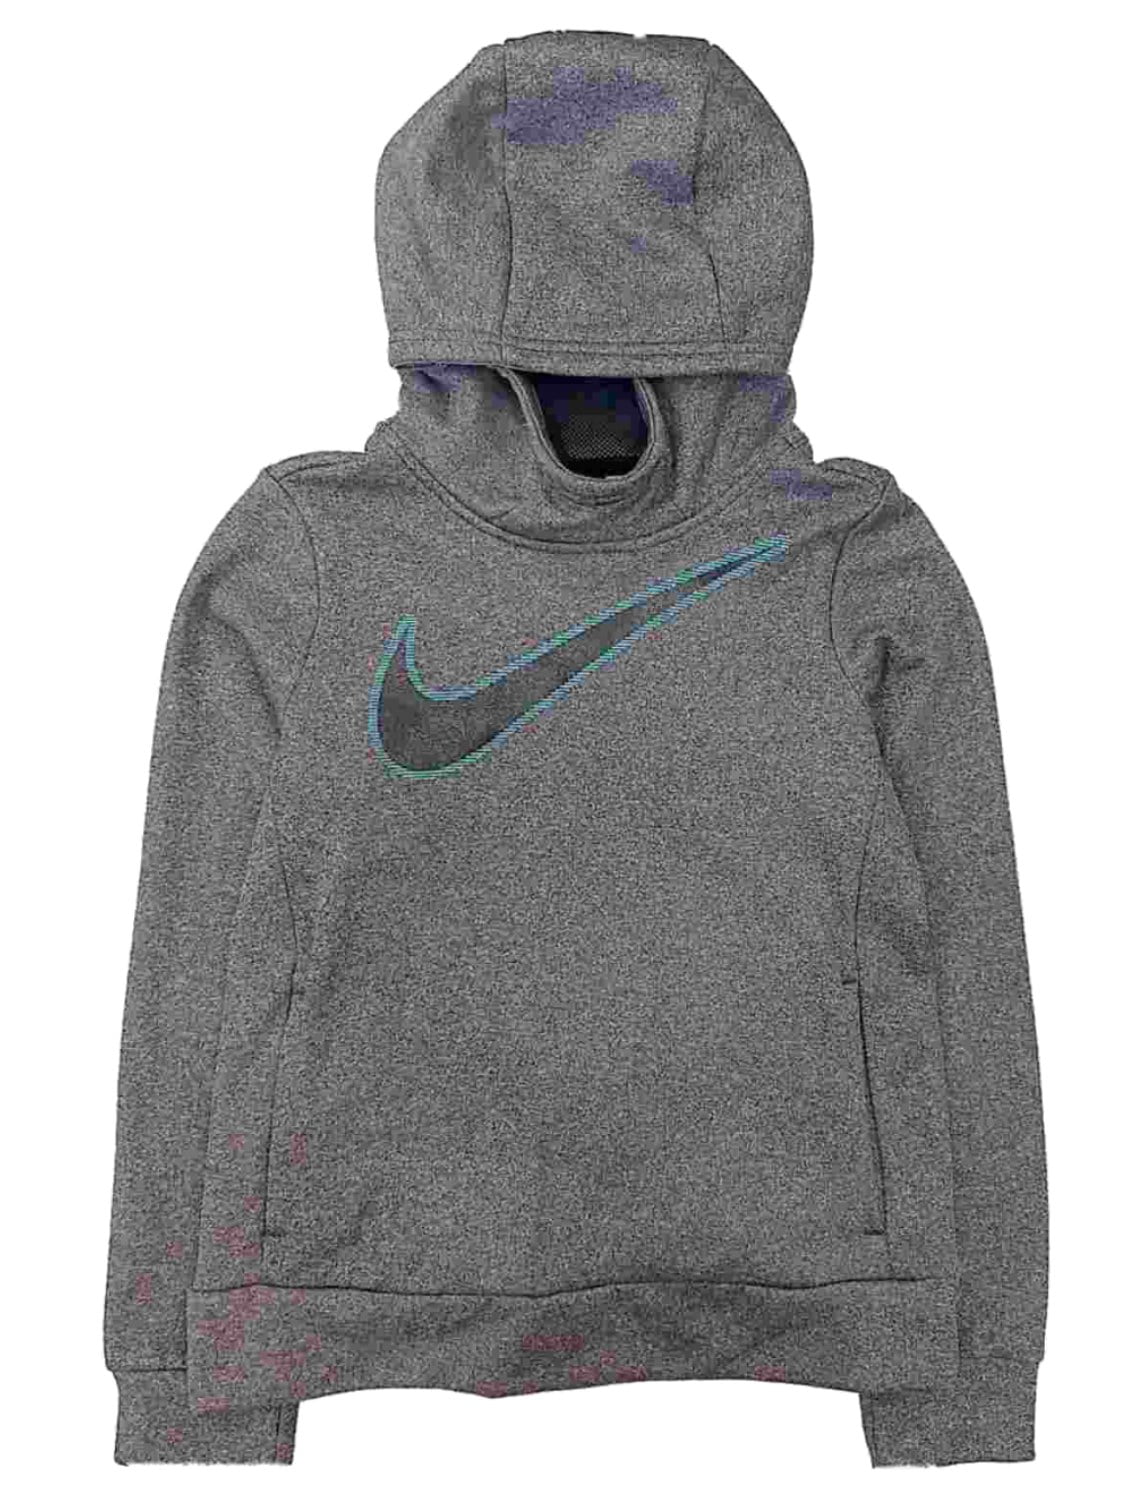 Nike Girls Gray Aqua Blue Sweatshirt Jacket Dri-fit Medium - Walmart.com